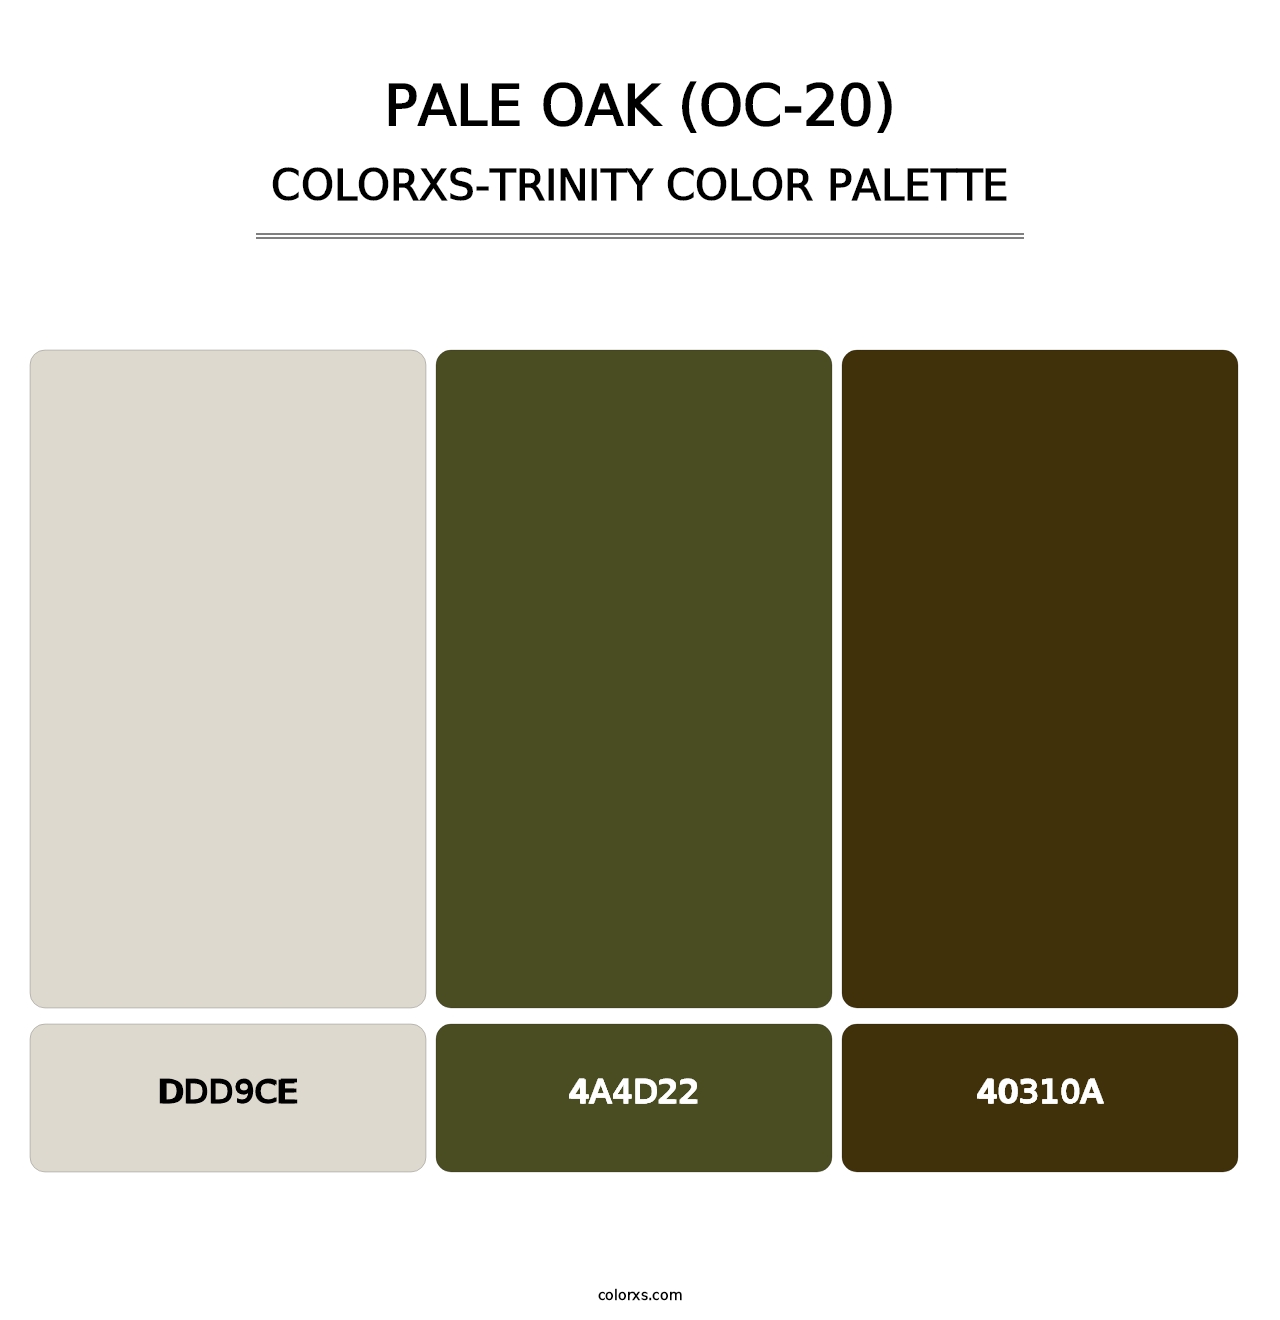 Pale Oak (OC-20) - Colorxs Trinity Palette